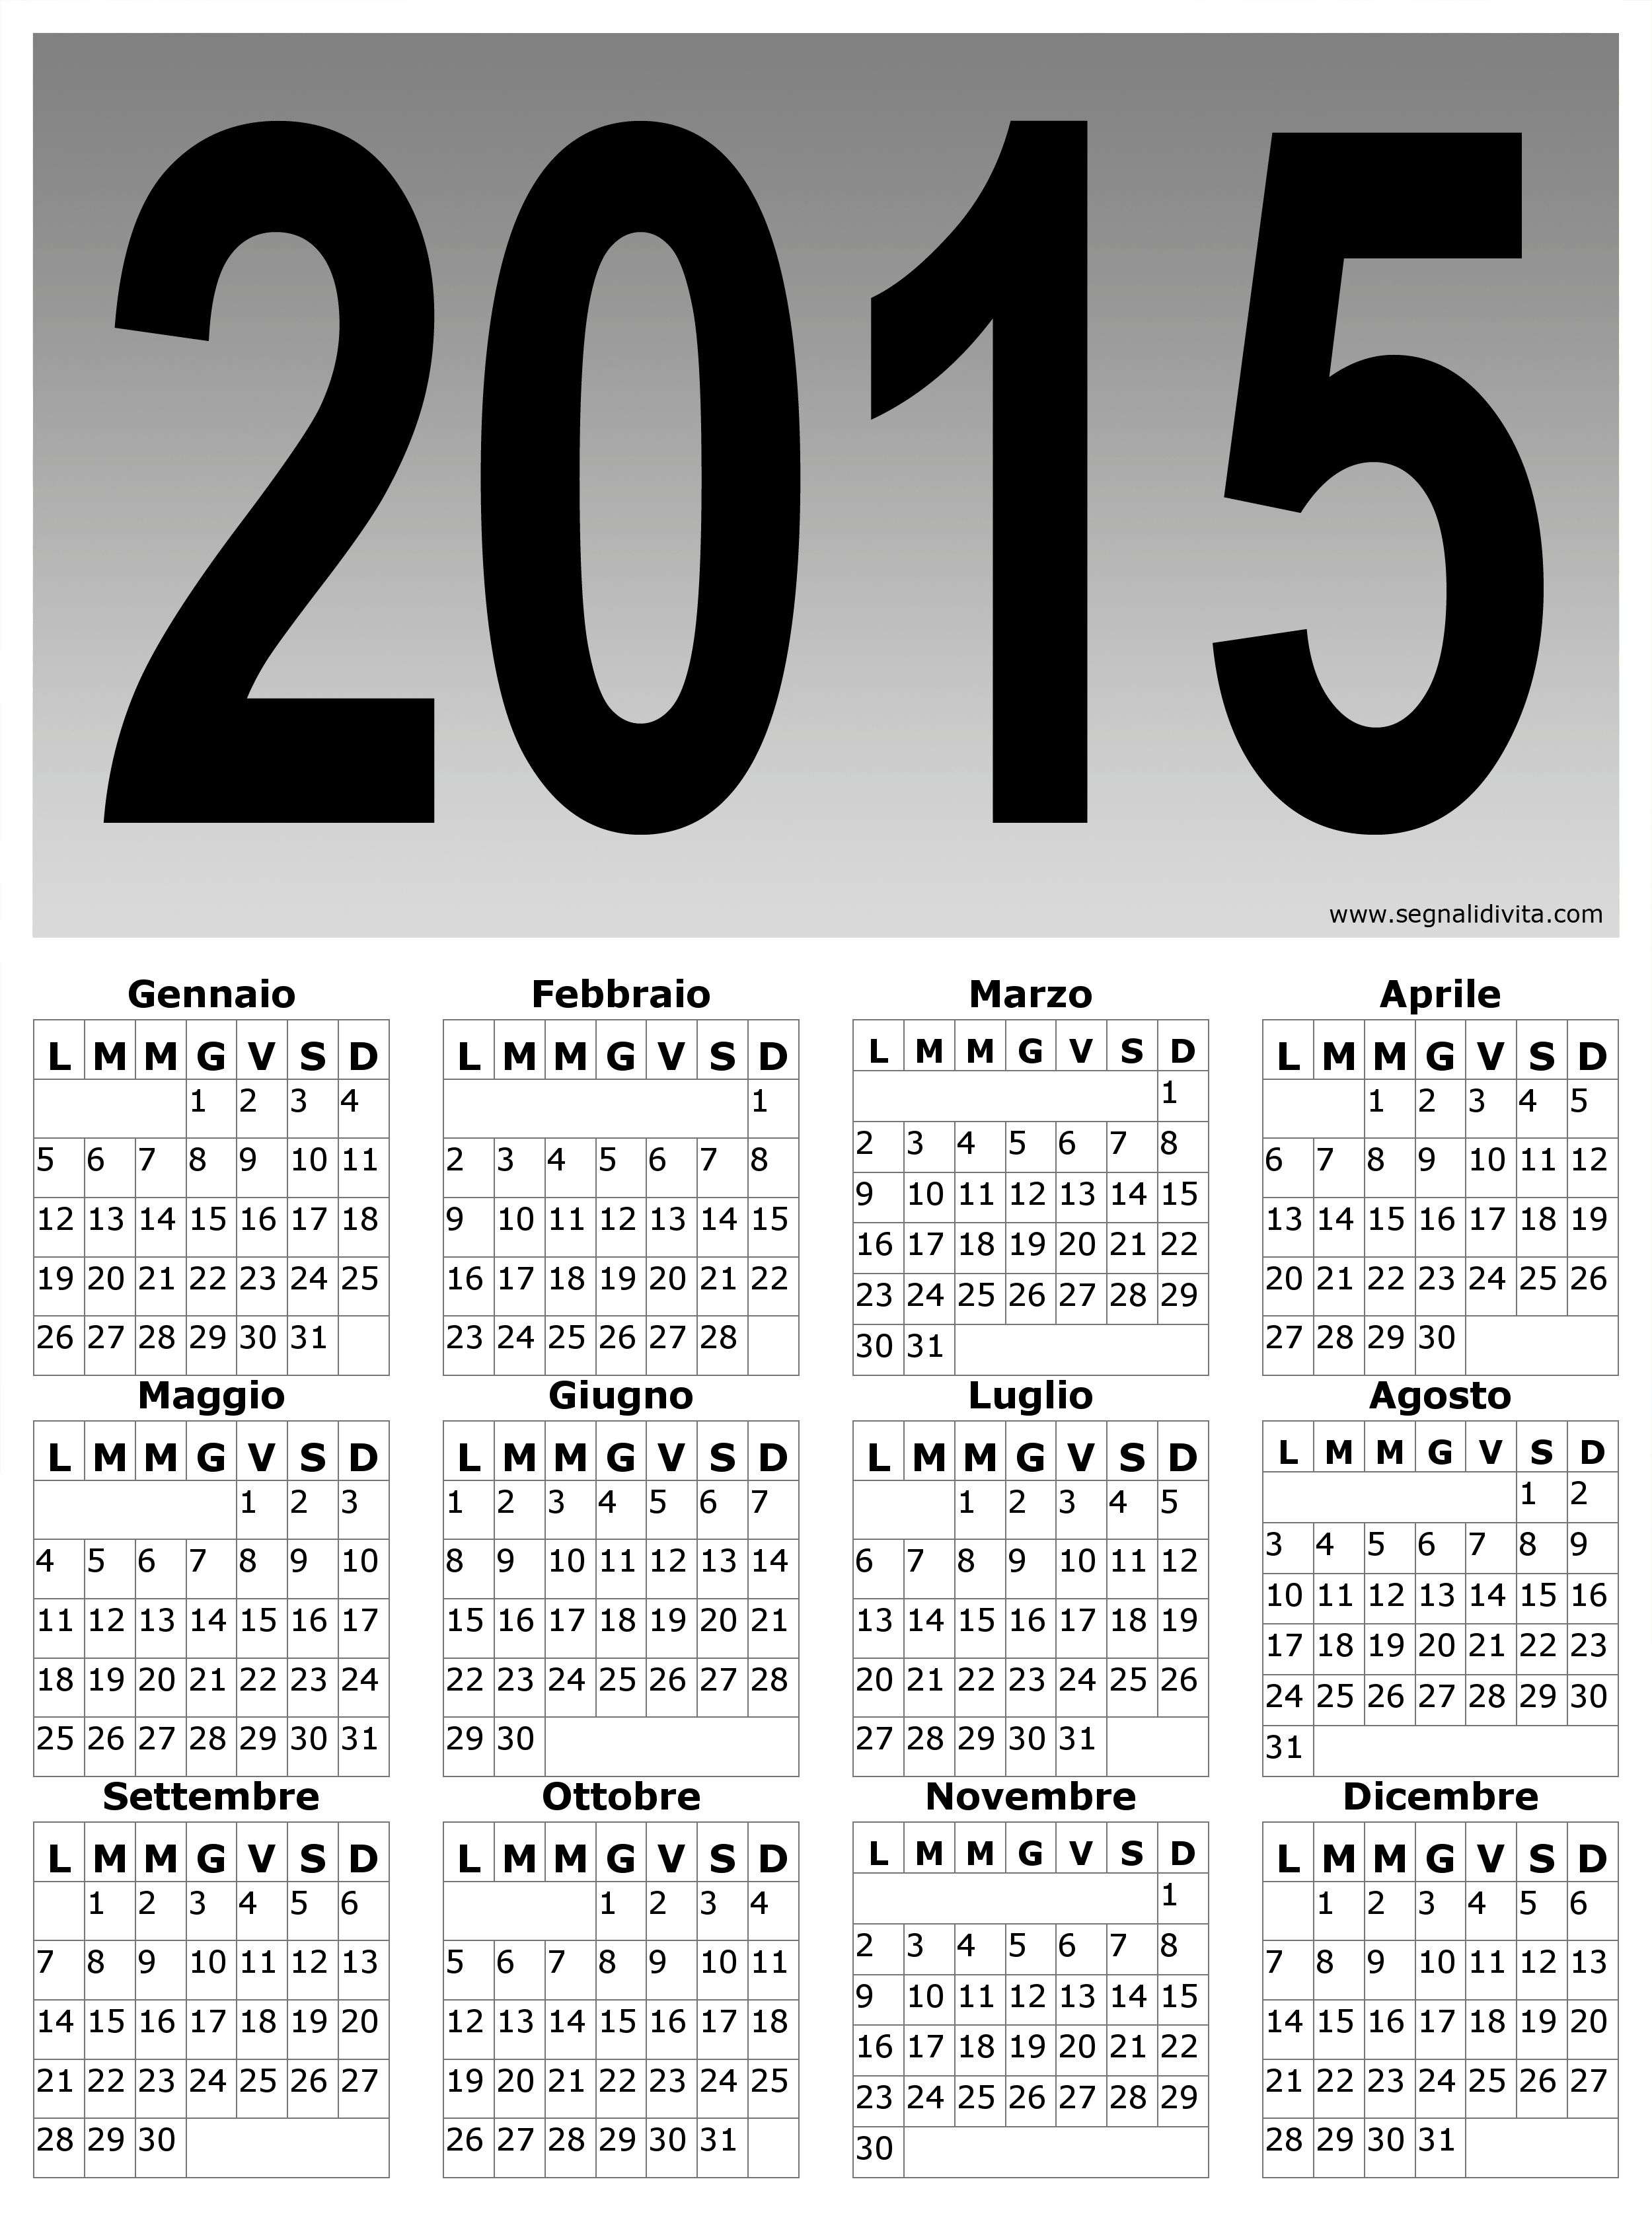 Calendario 2015 extra large: 2500 x 3350 pixel